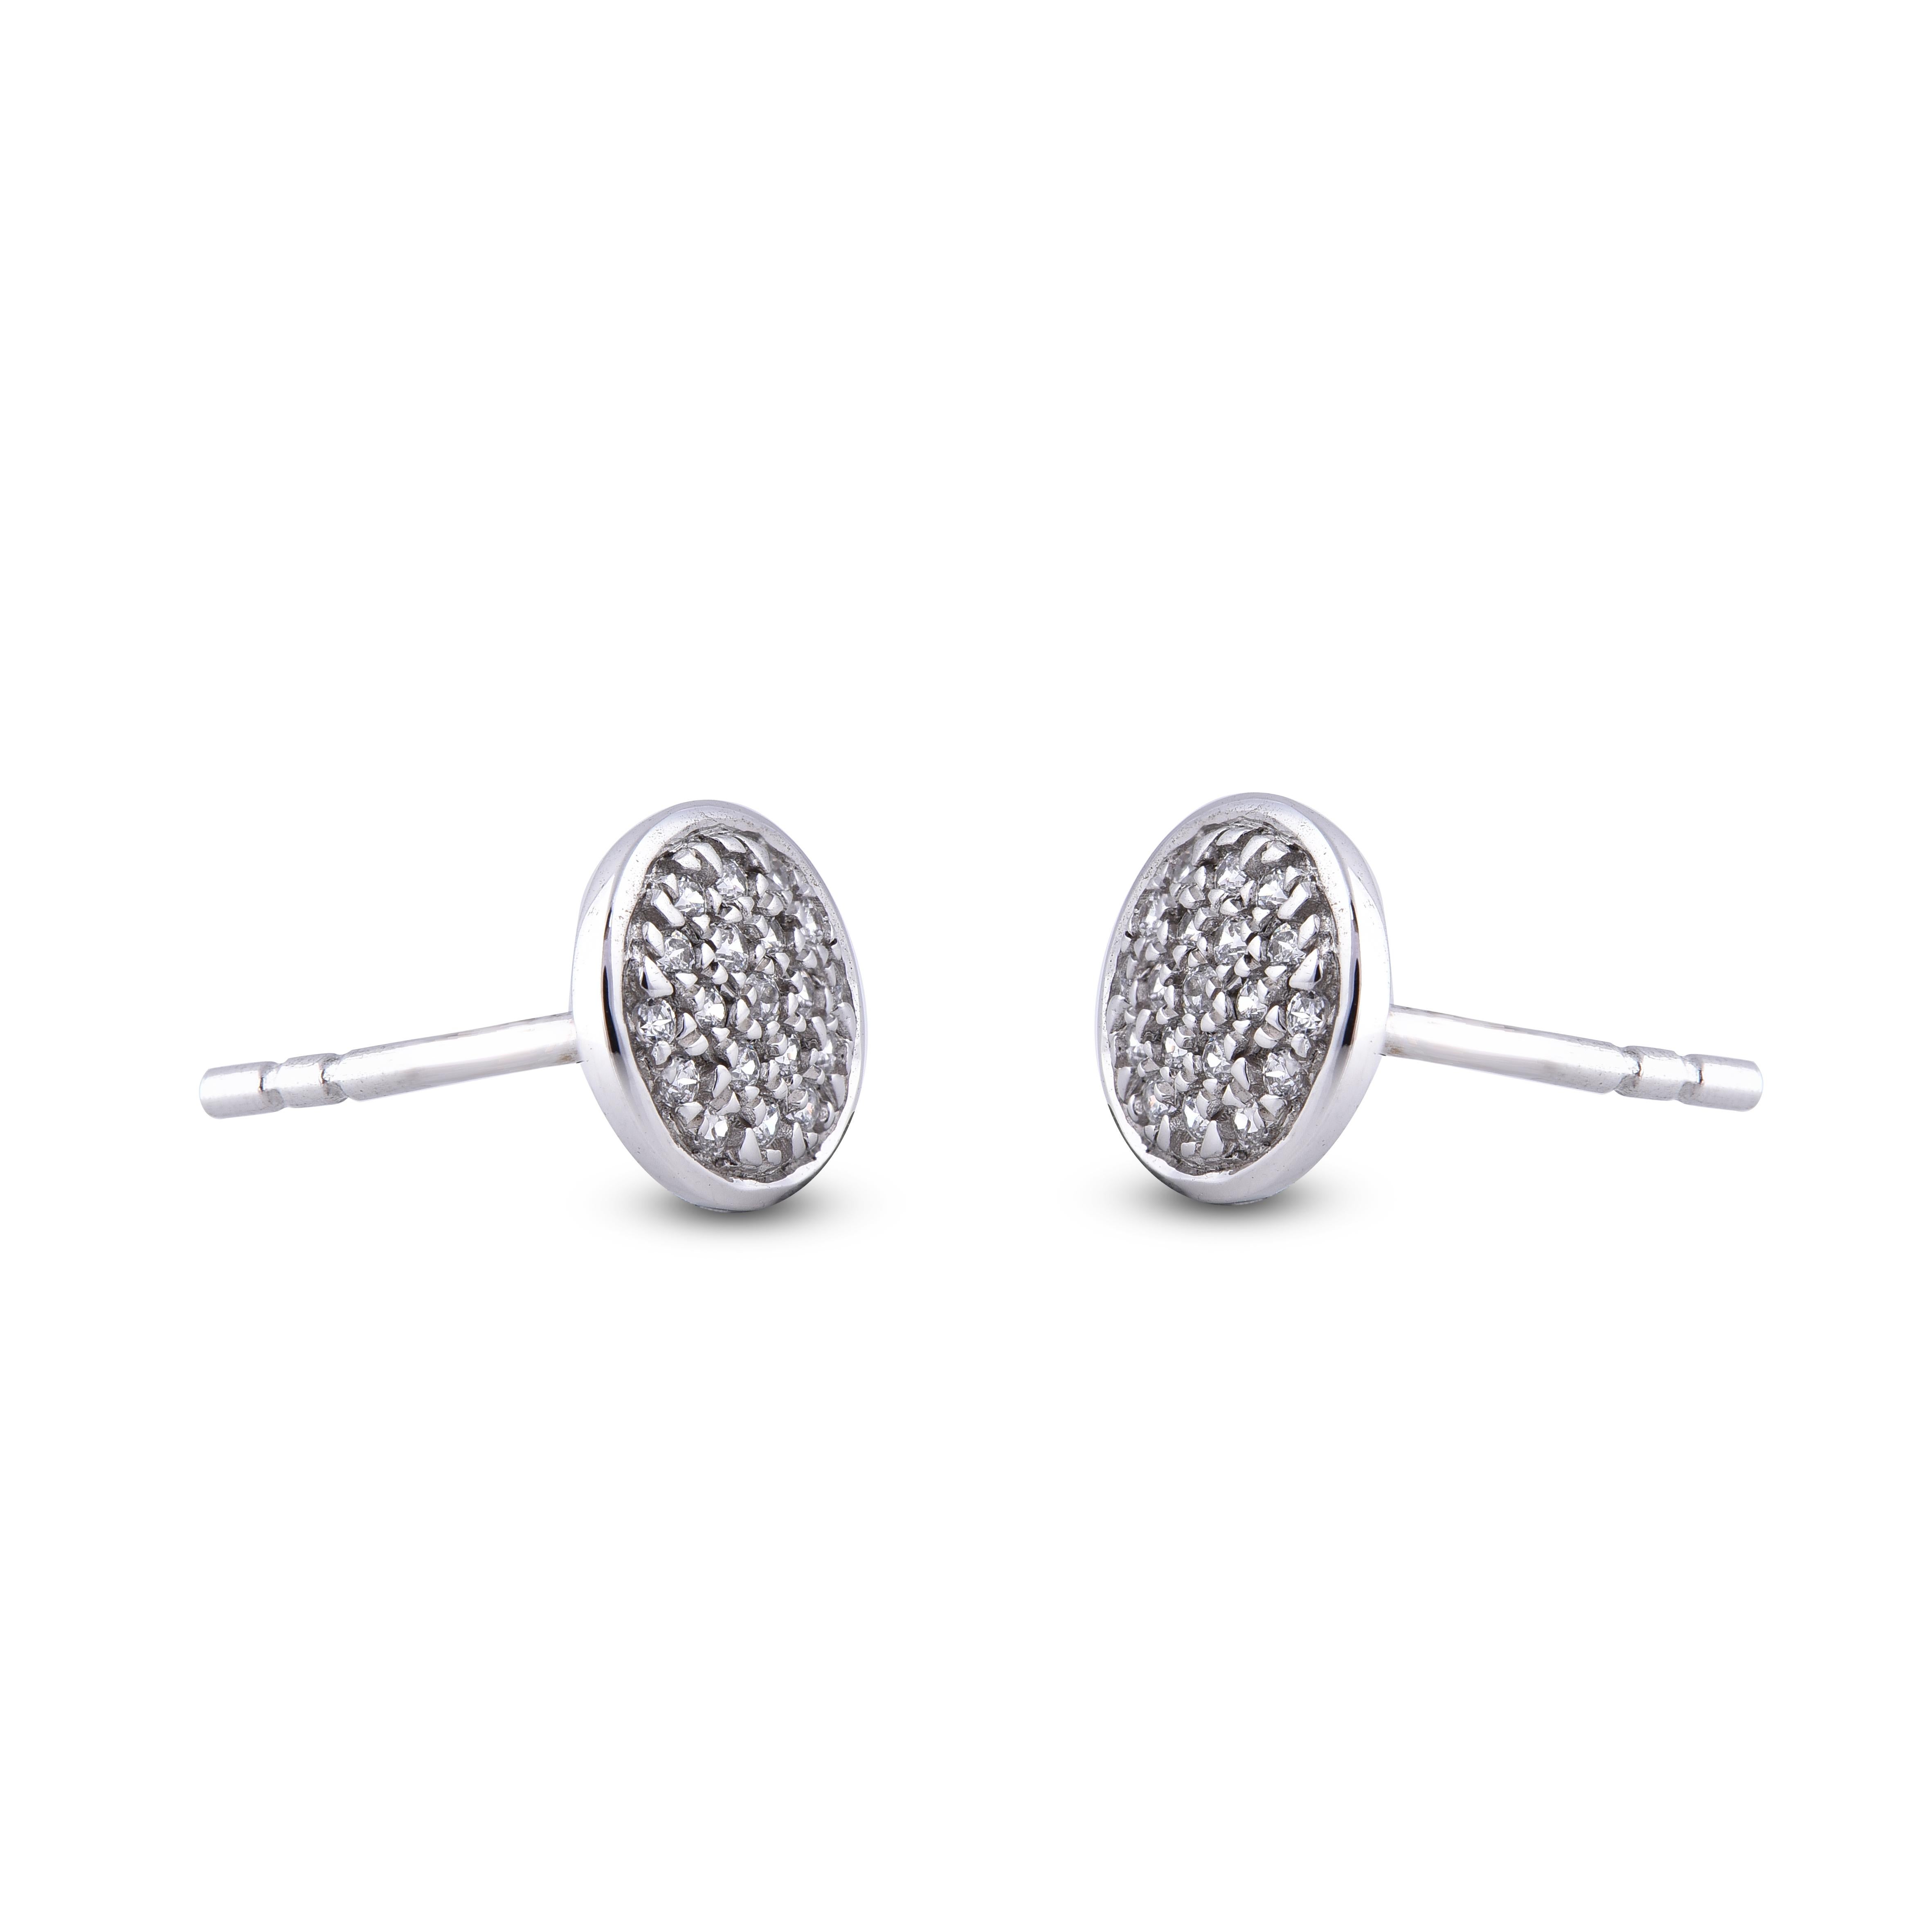 0.15 carat diamond earrings